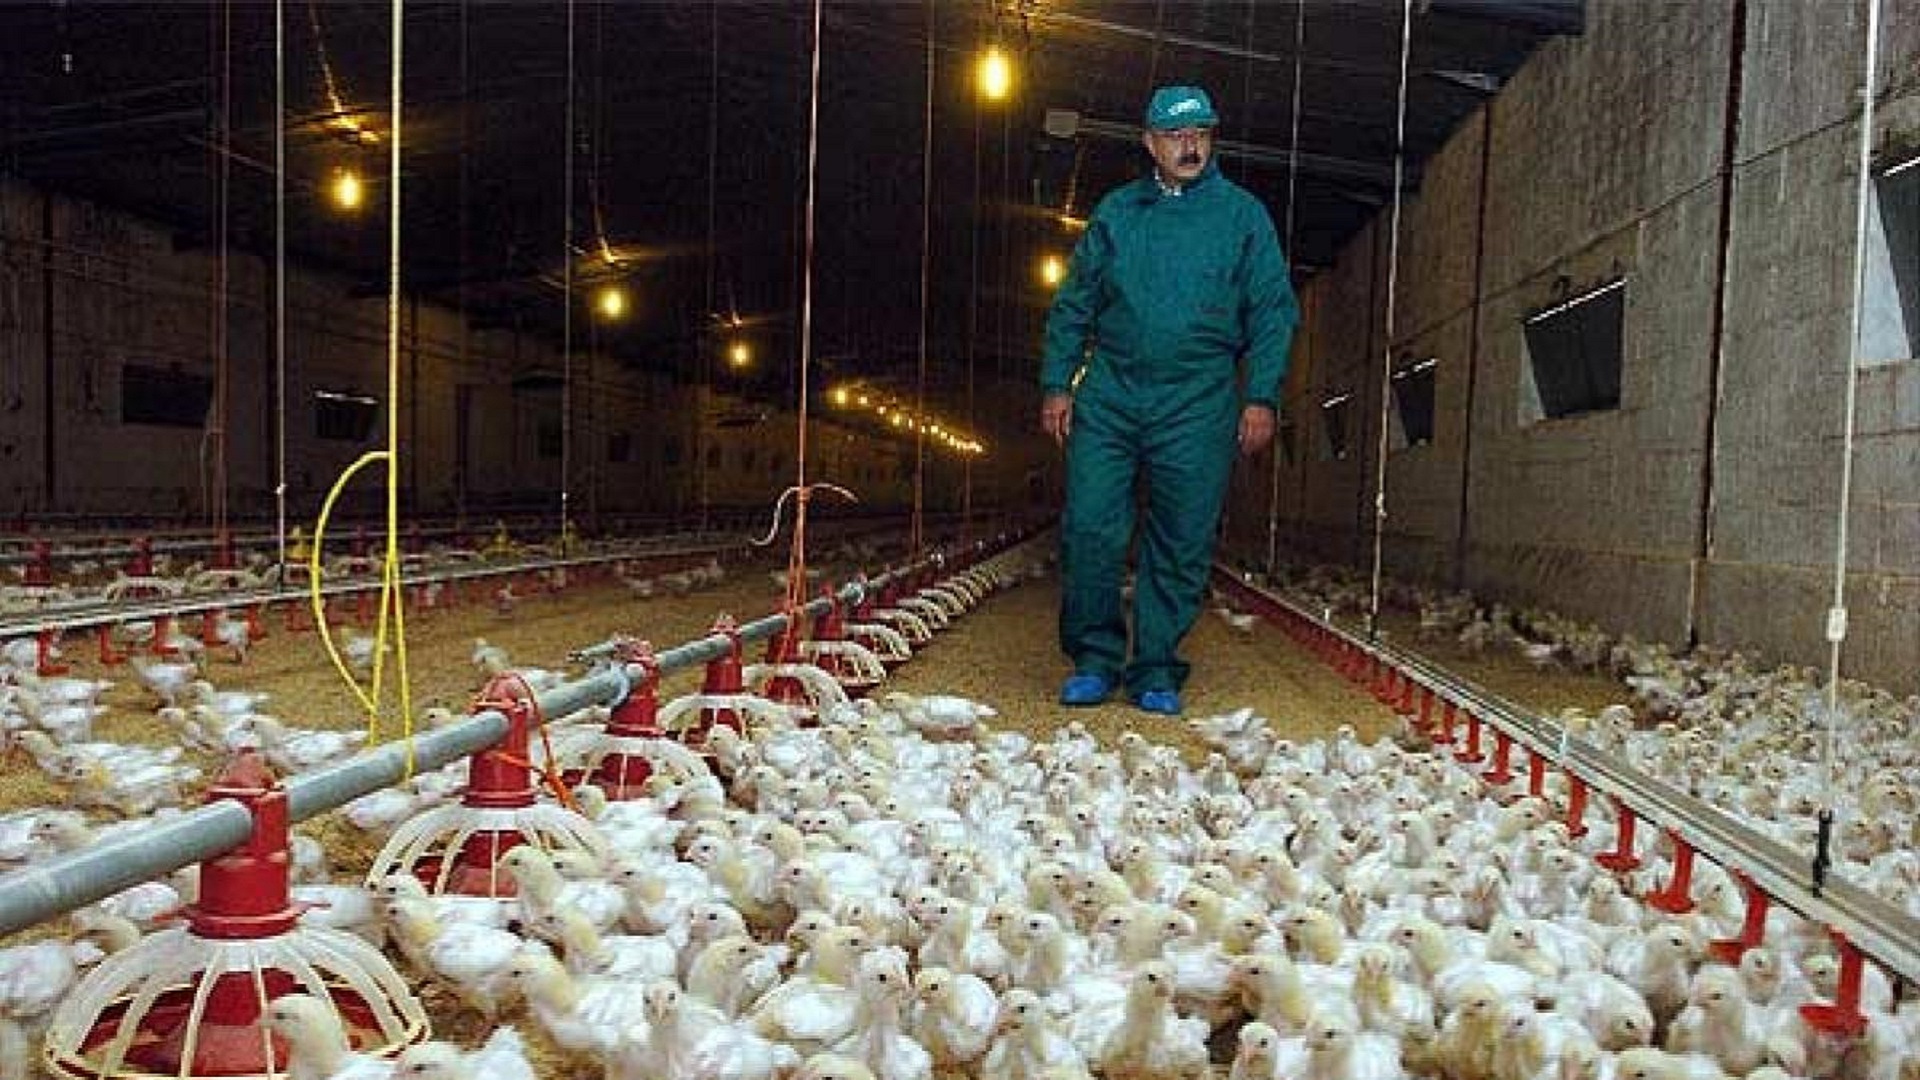 Gripe aviar